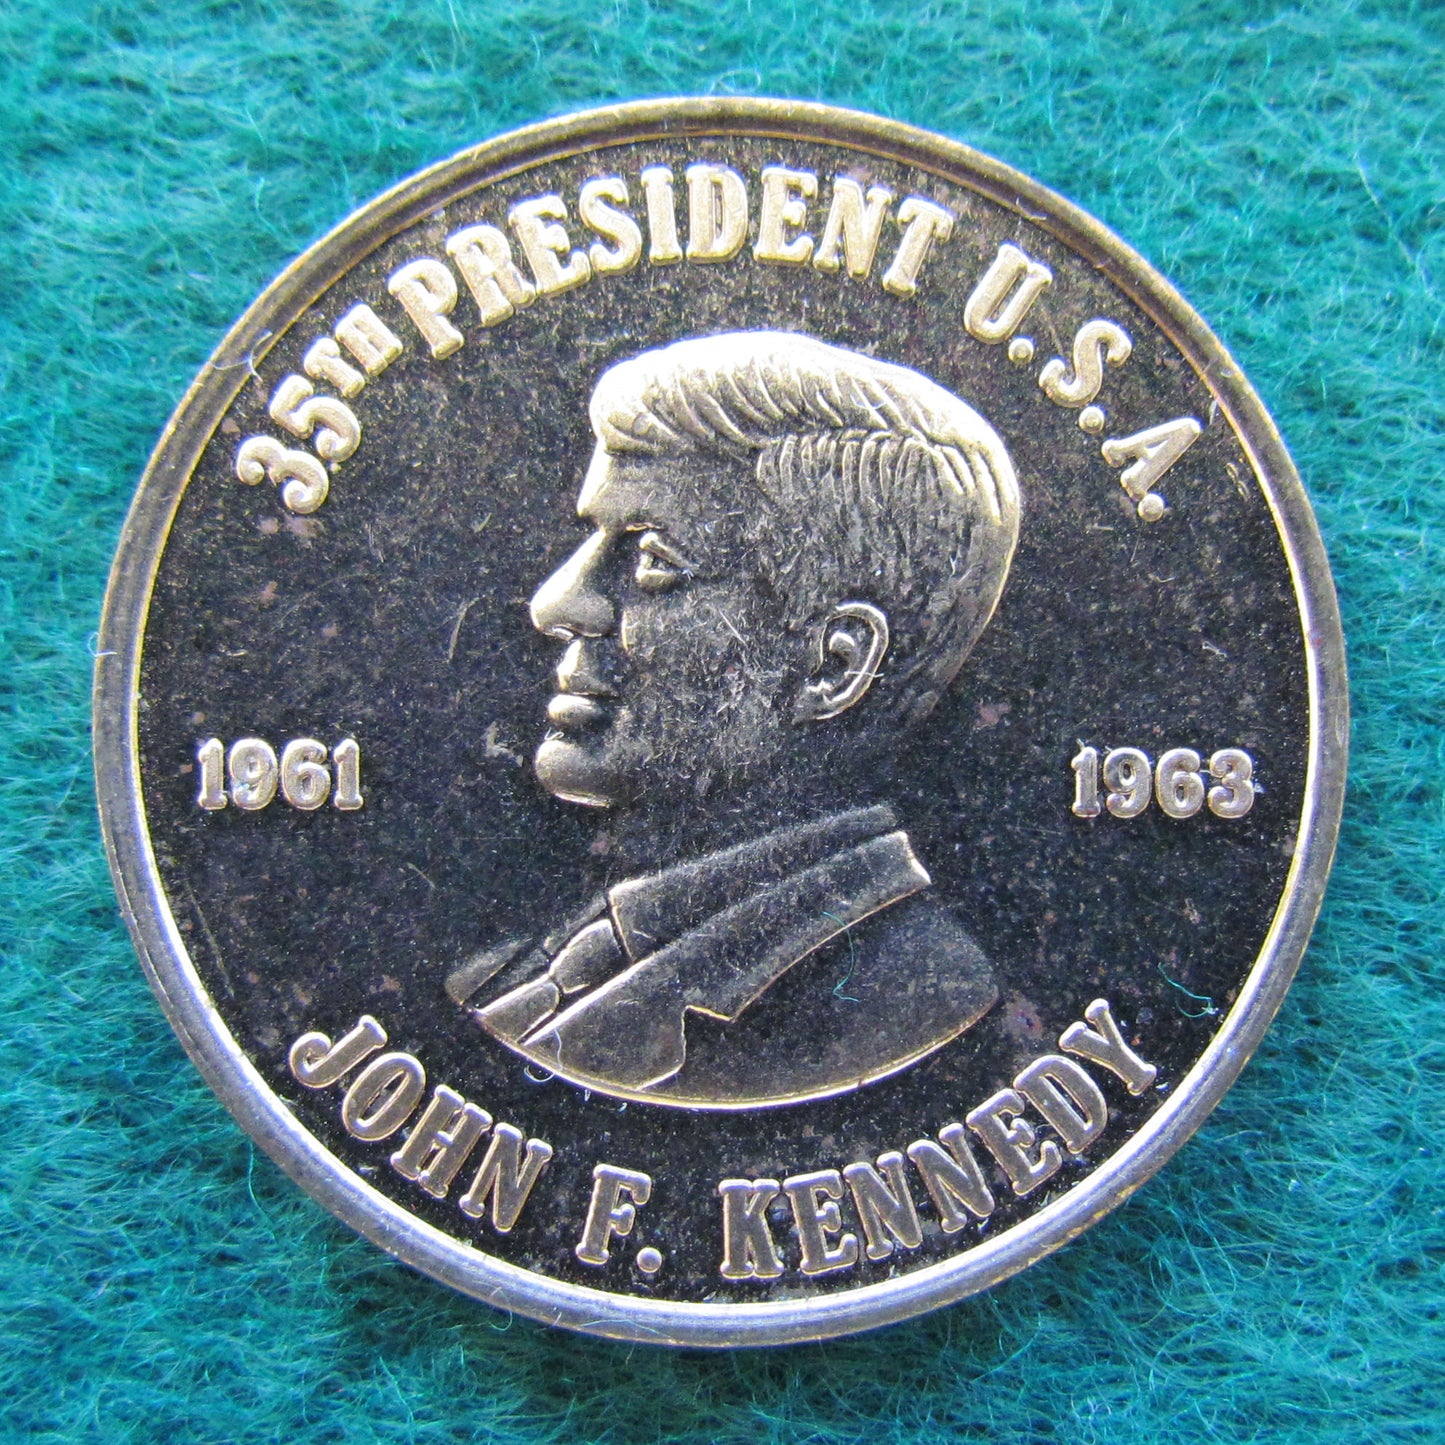 John F. Kennedy Coin 1961 1963 Peace Corps Token